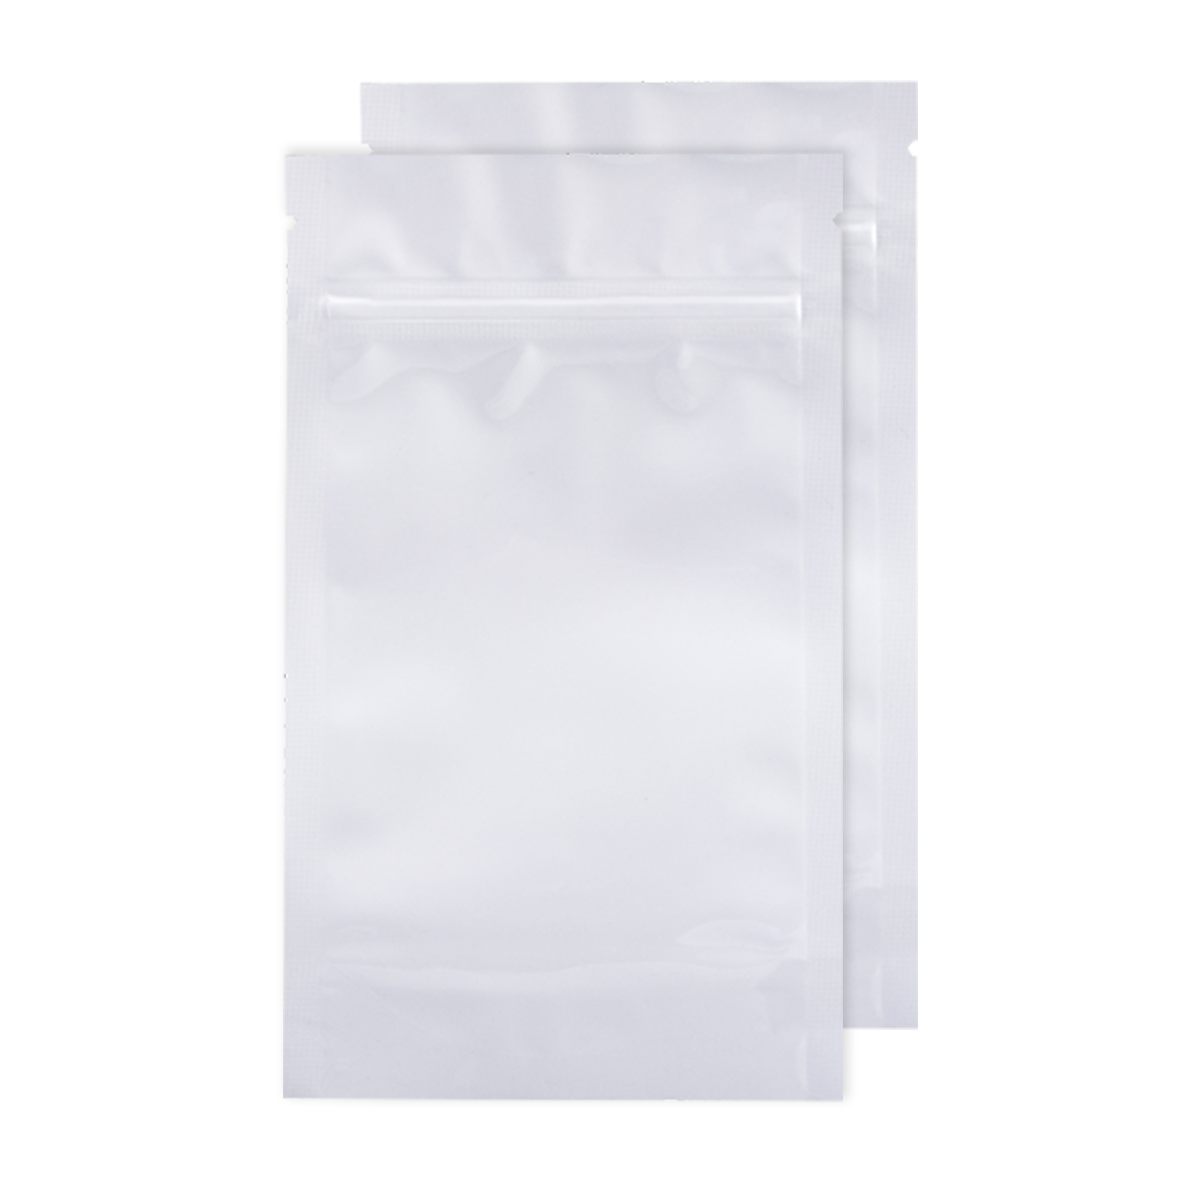 Quarter Ounce White/White Opaque Barrier Bags